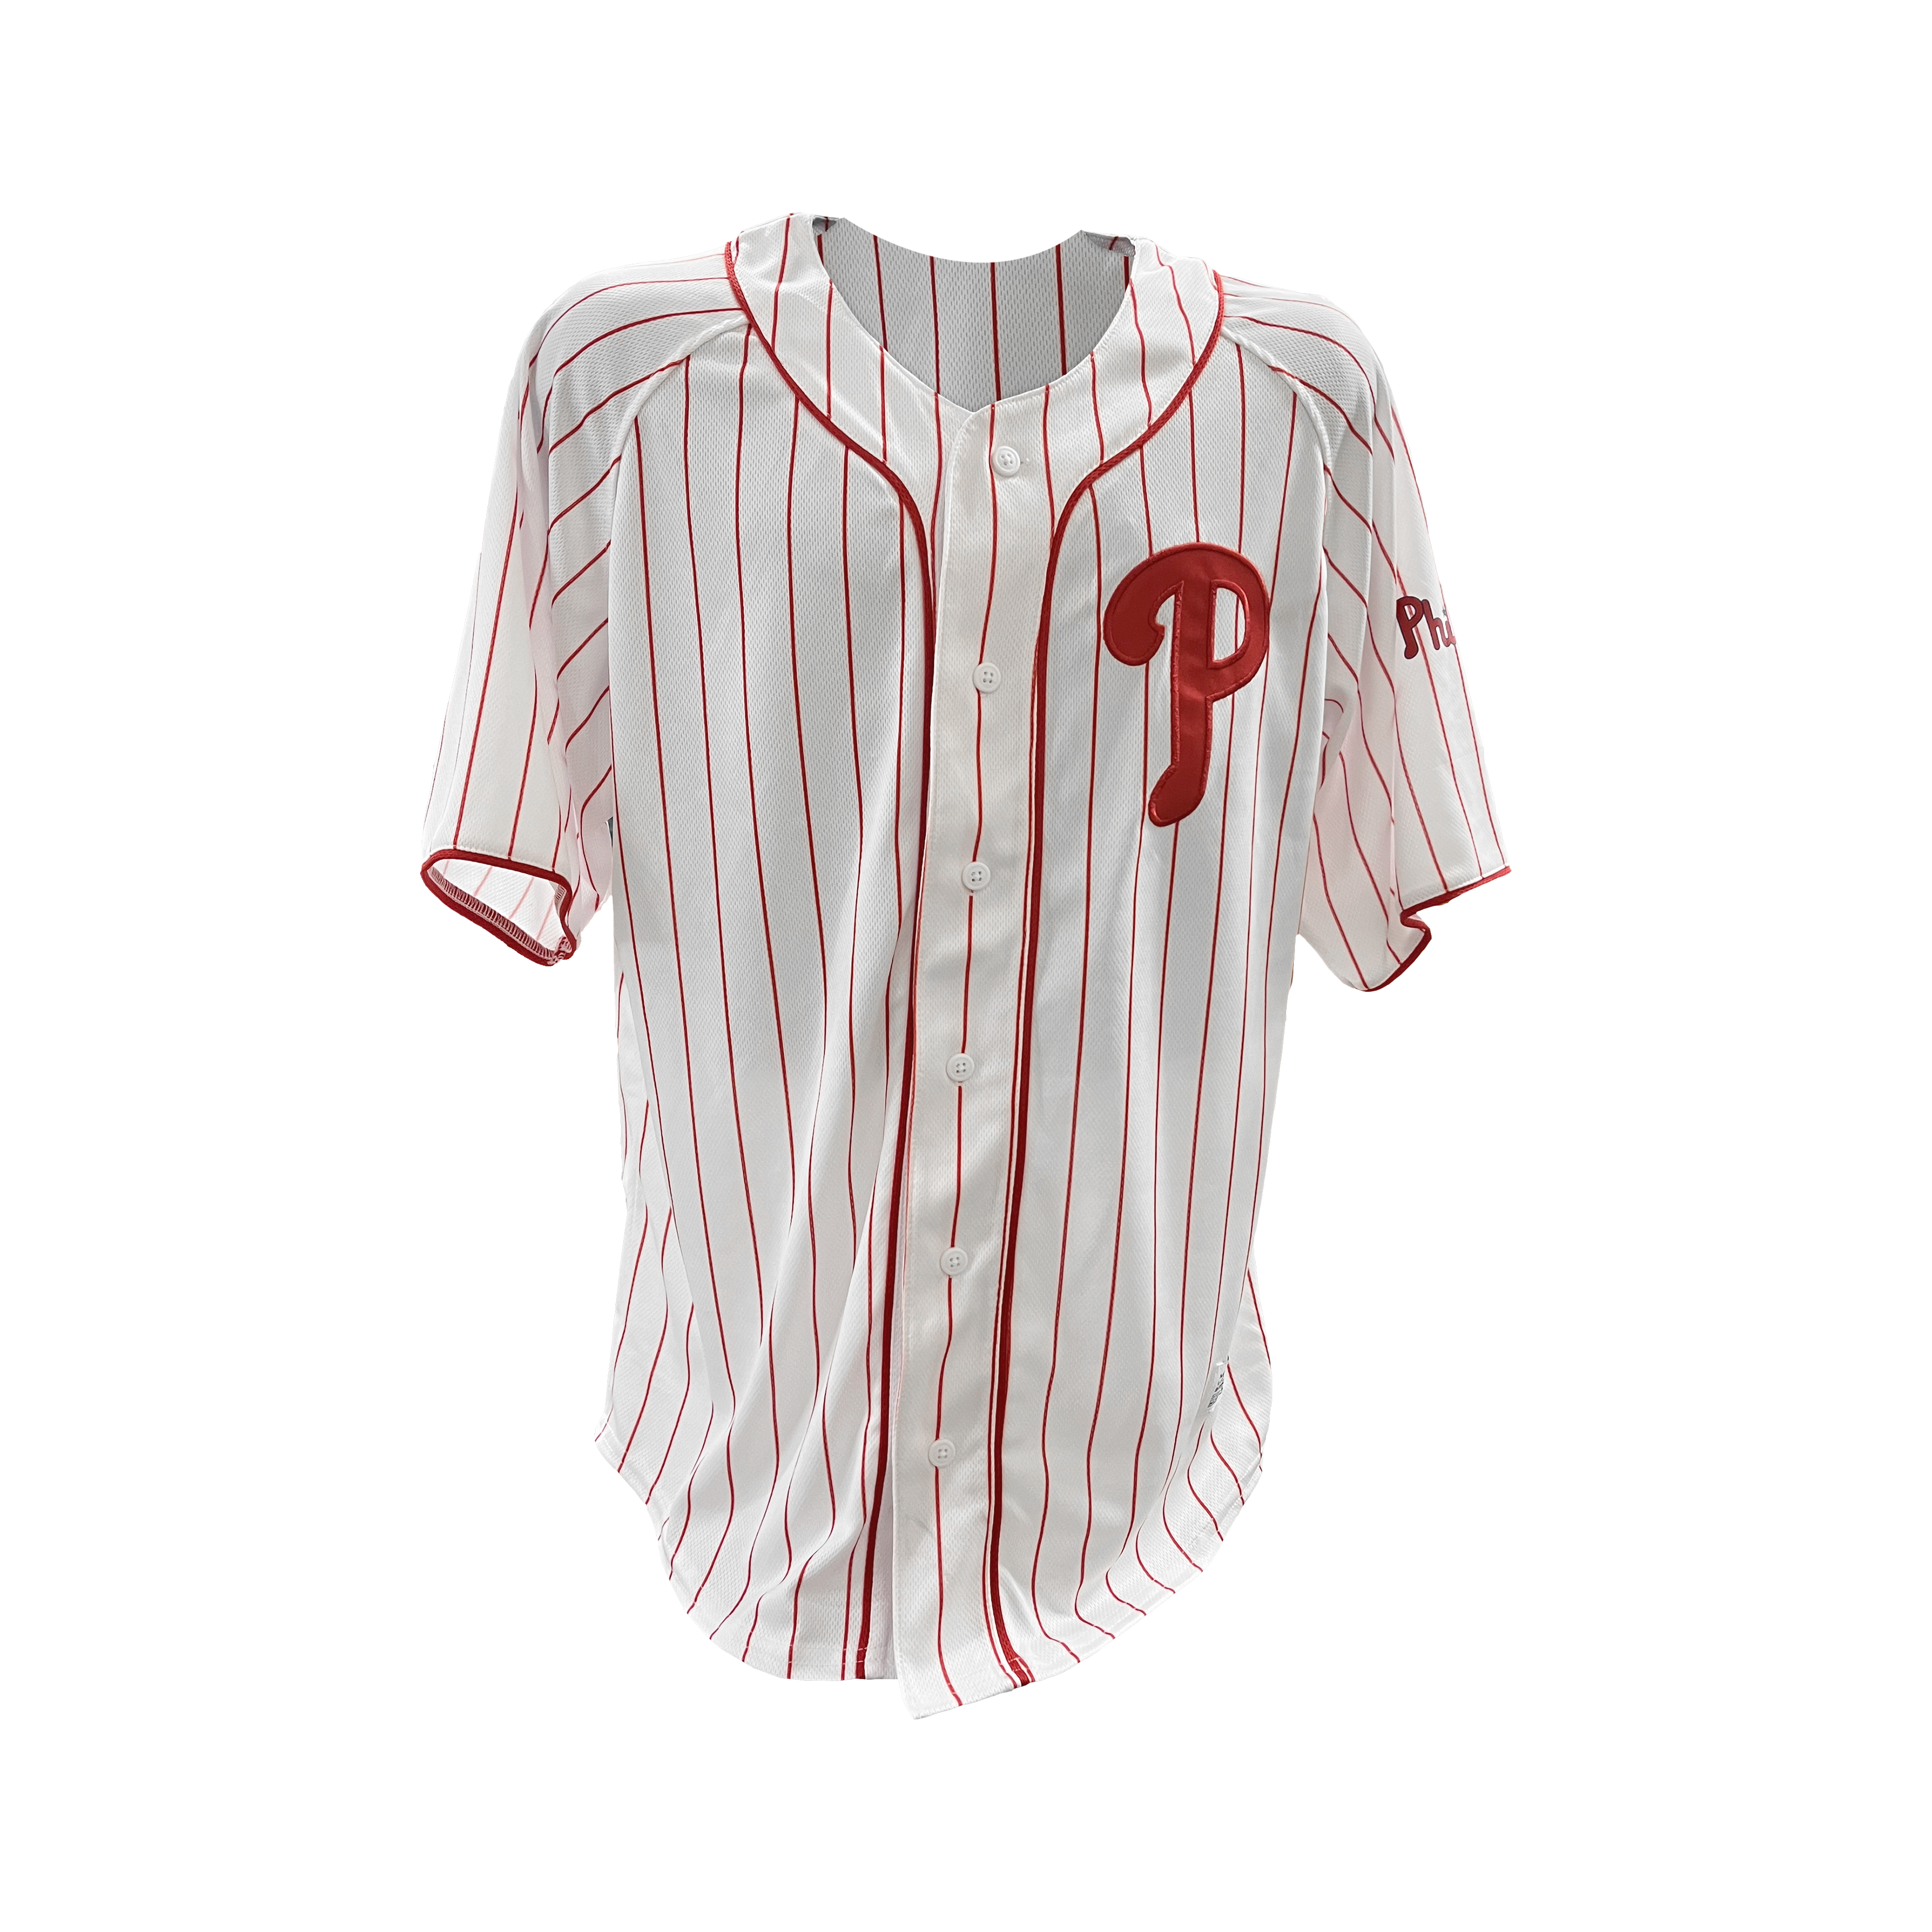 Official Philadelphia Phillies Jerseys, Phillies Baseball Jerseys